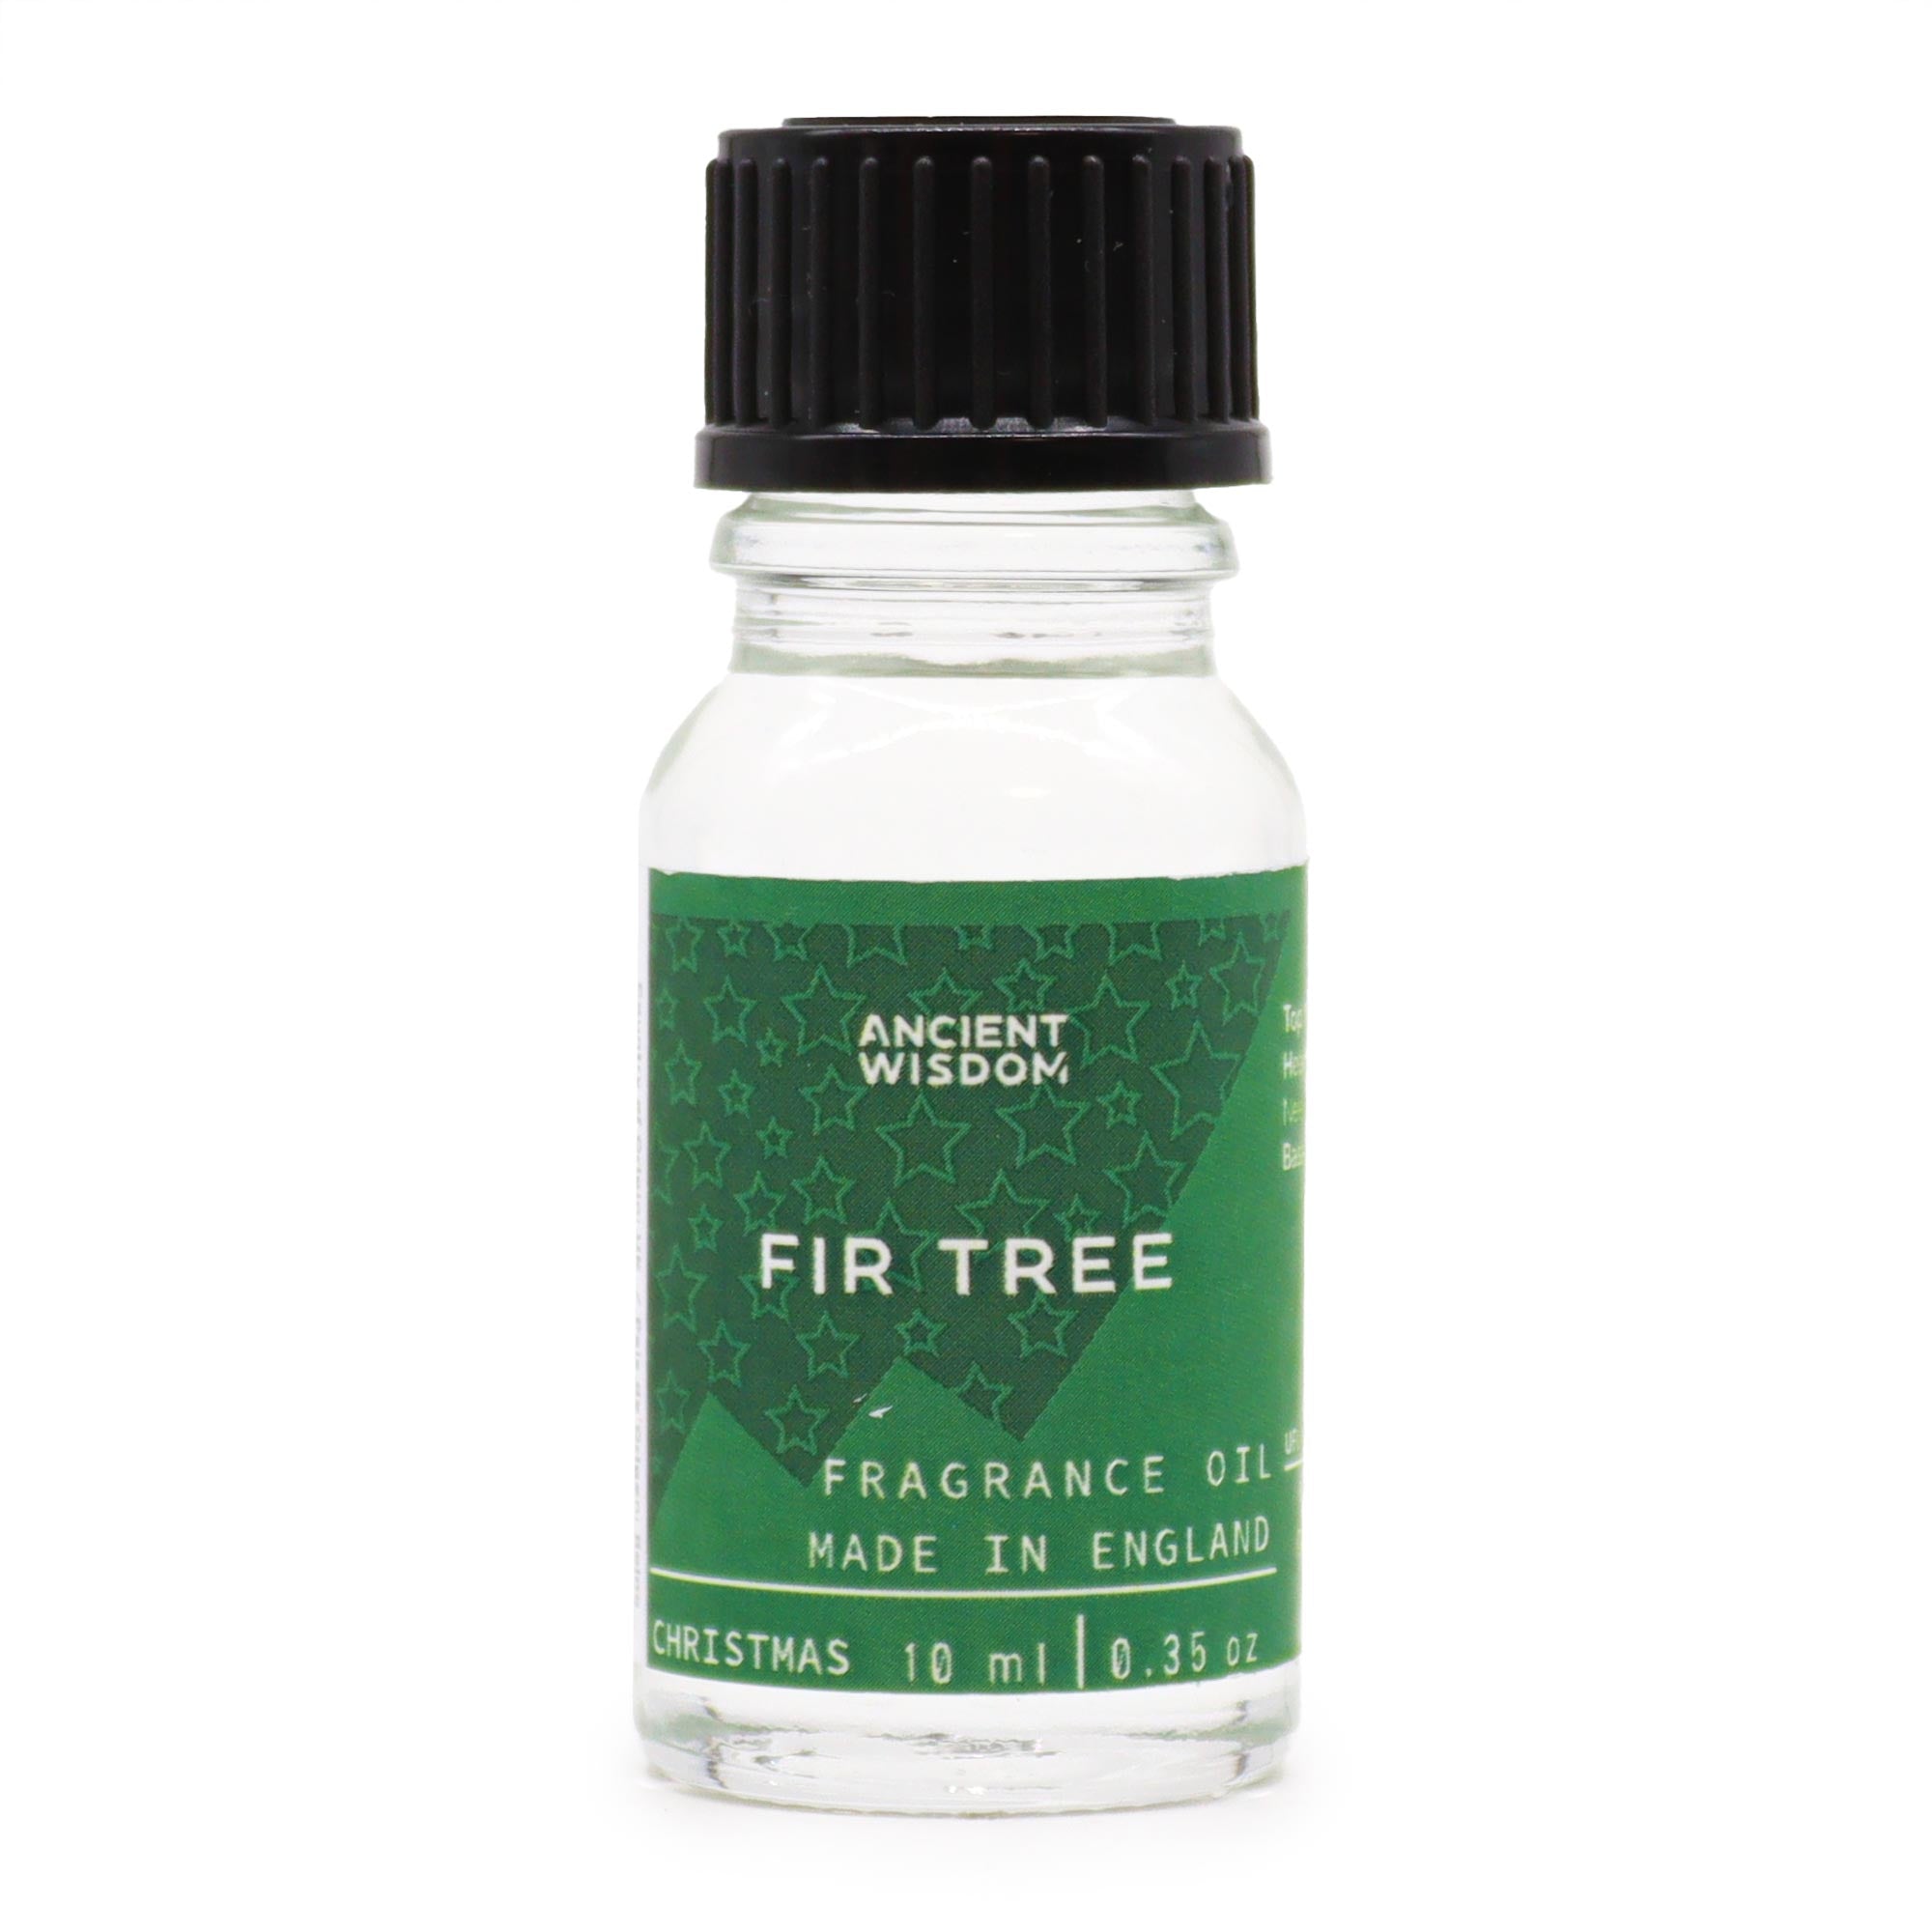 View Fir Tree Fragrance Oil 10ml information